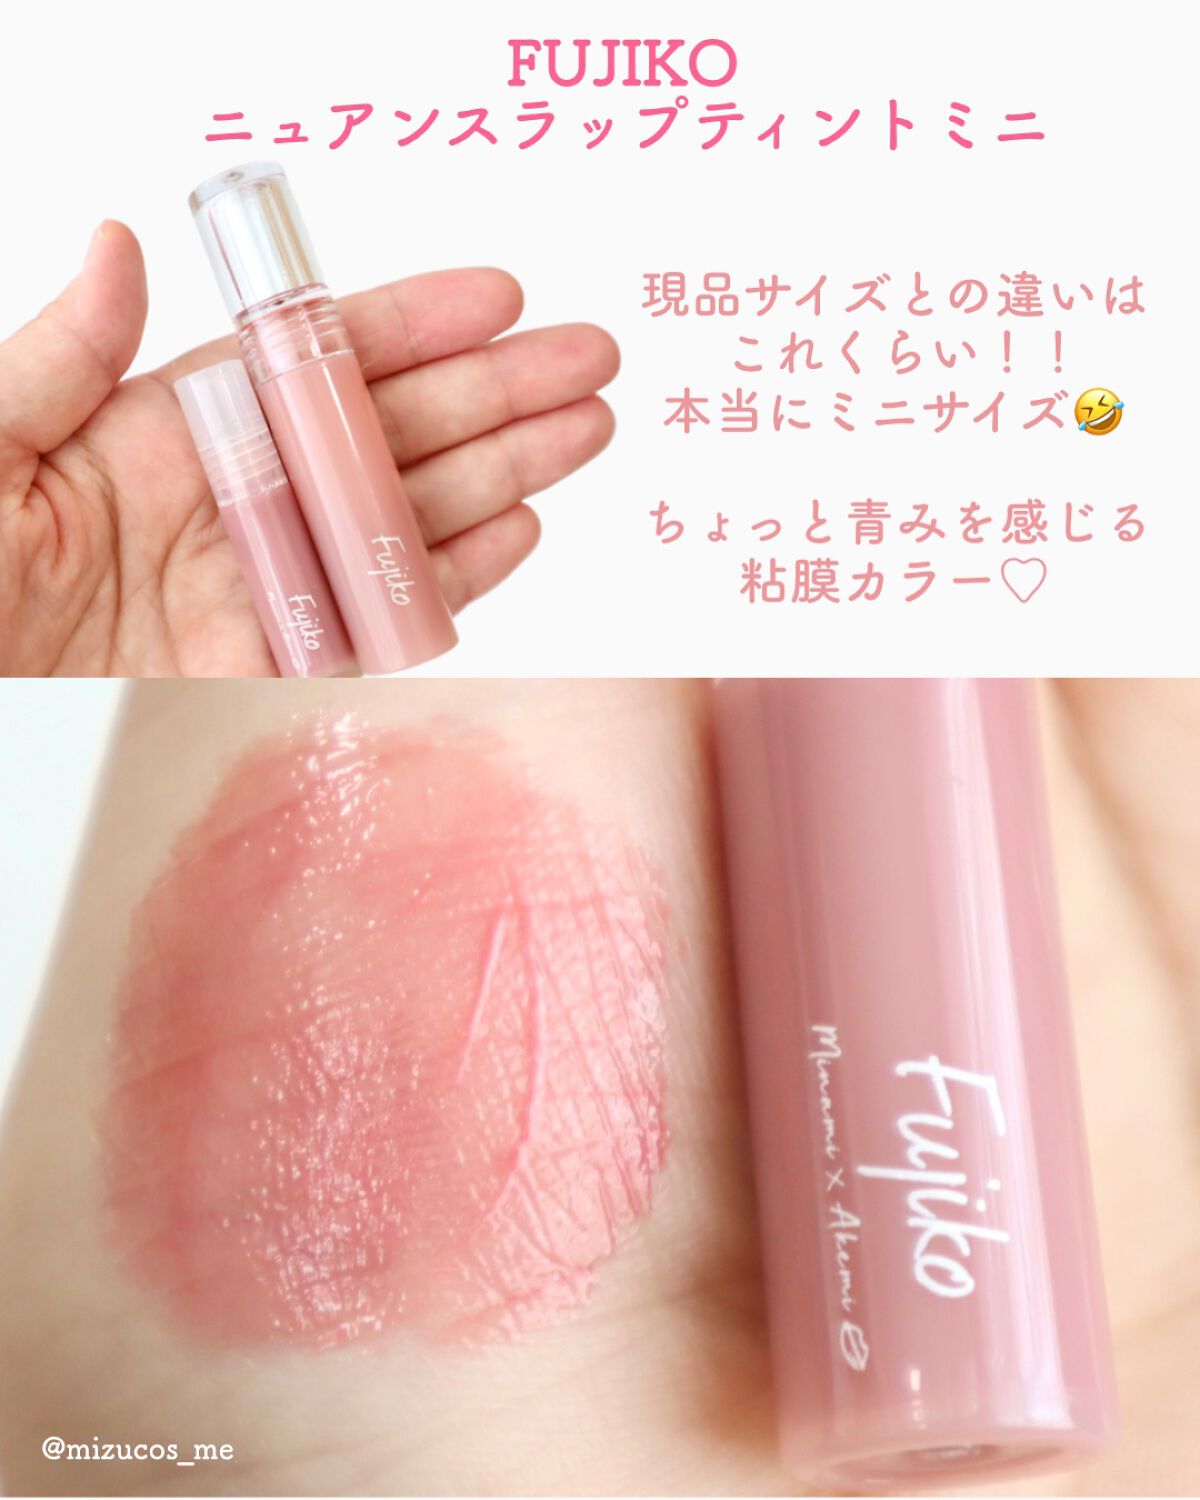 fujiko フジコ ニュアンスラップティント VOCE限定 みな実の粘膜ピンク